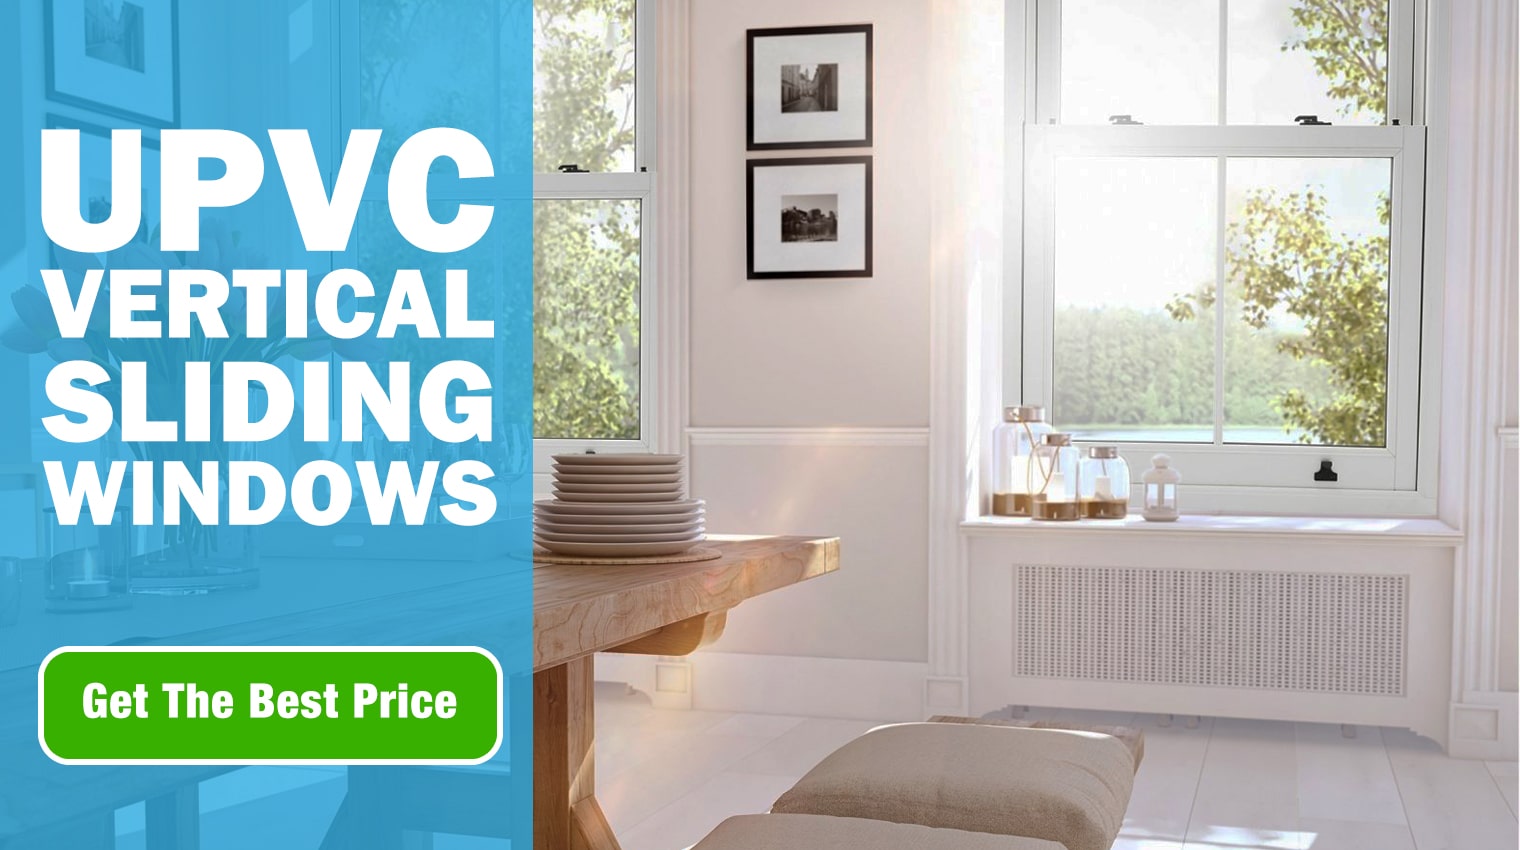 UPVC vertical sliding windows